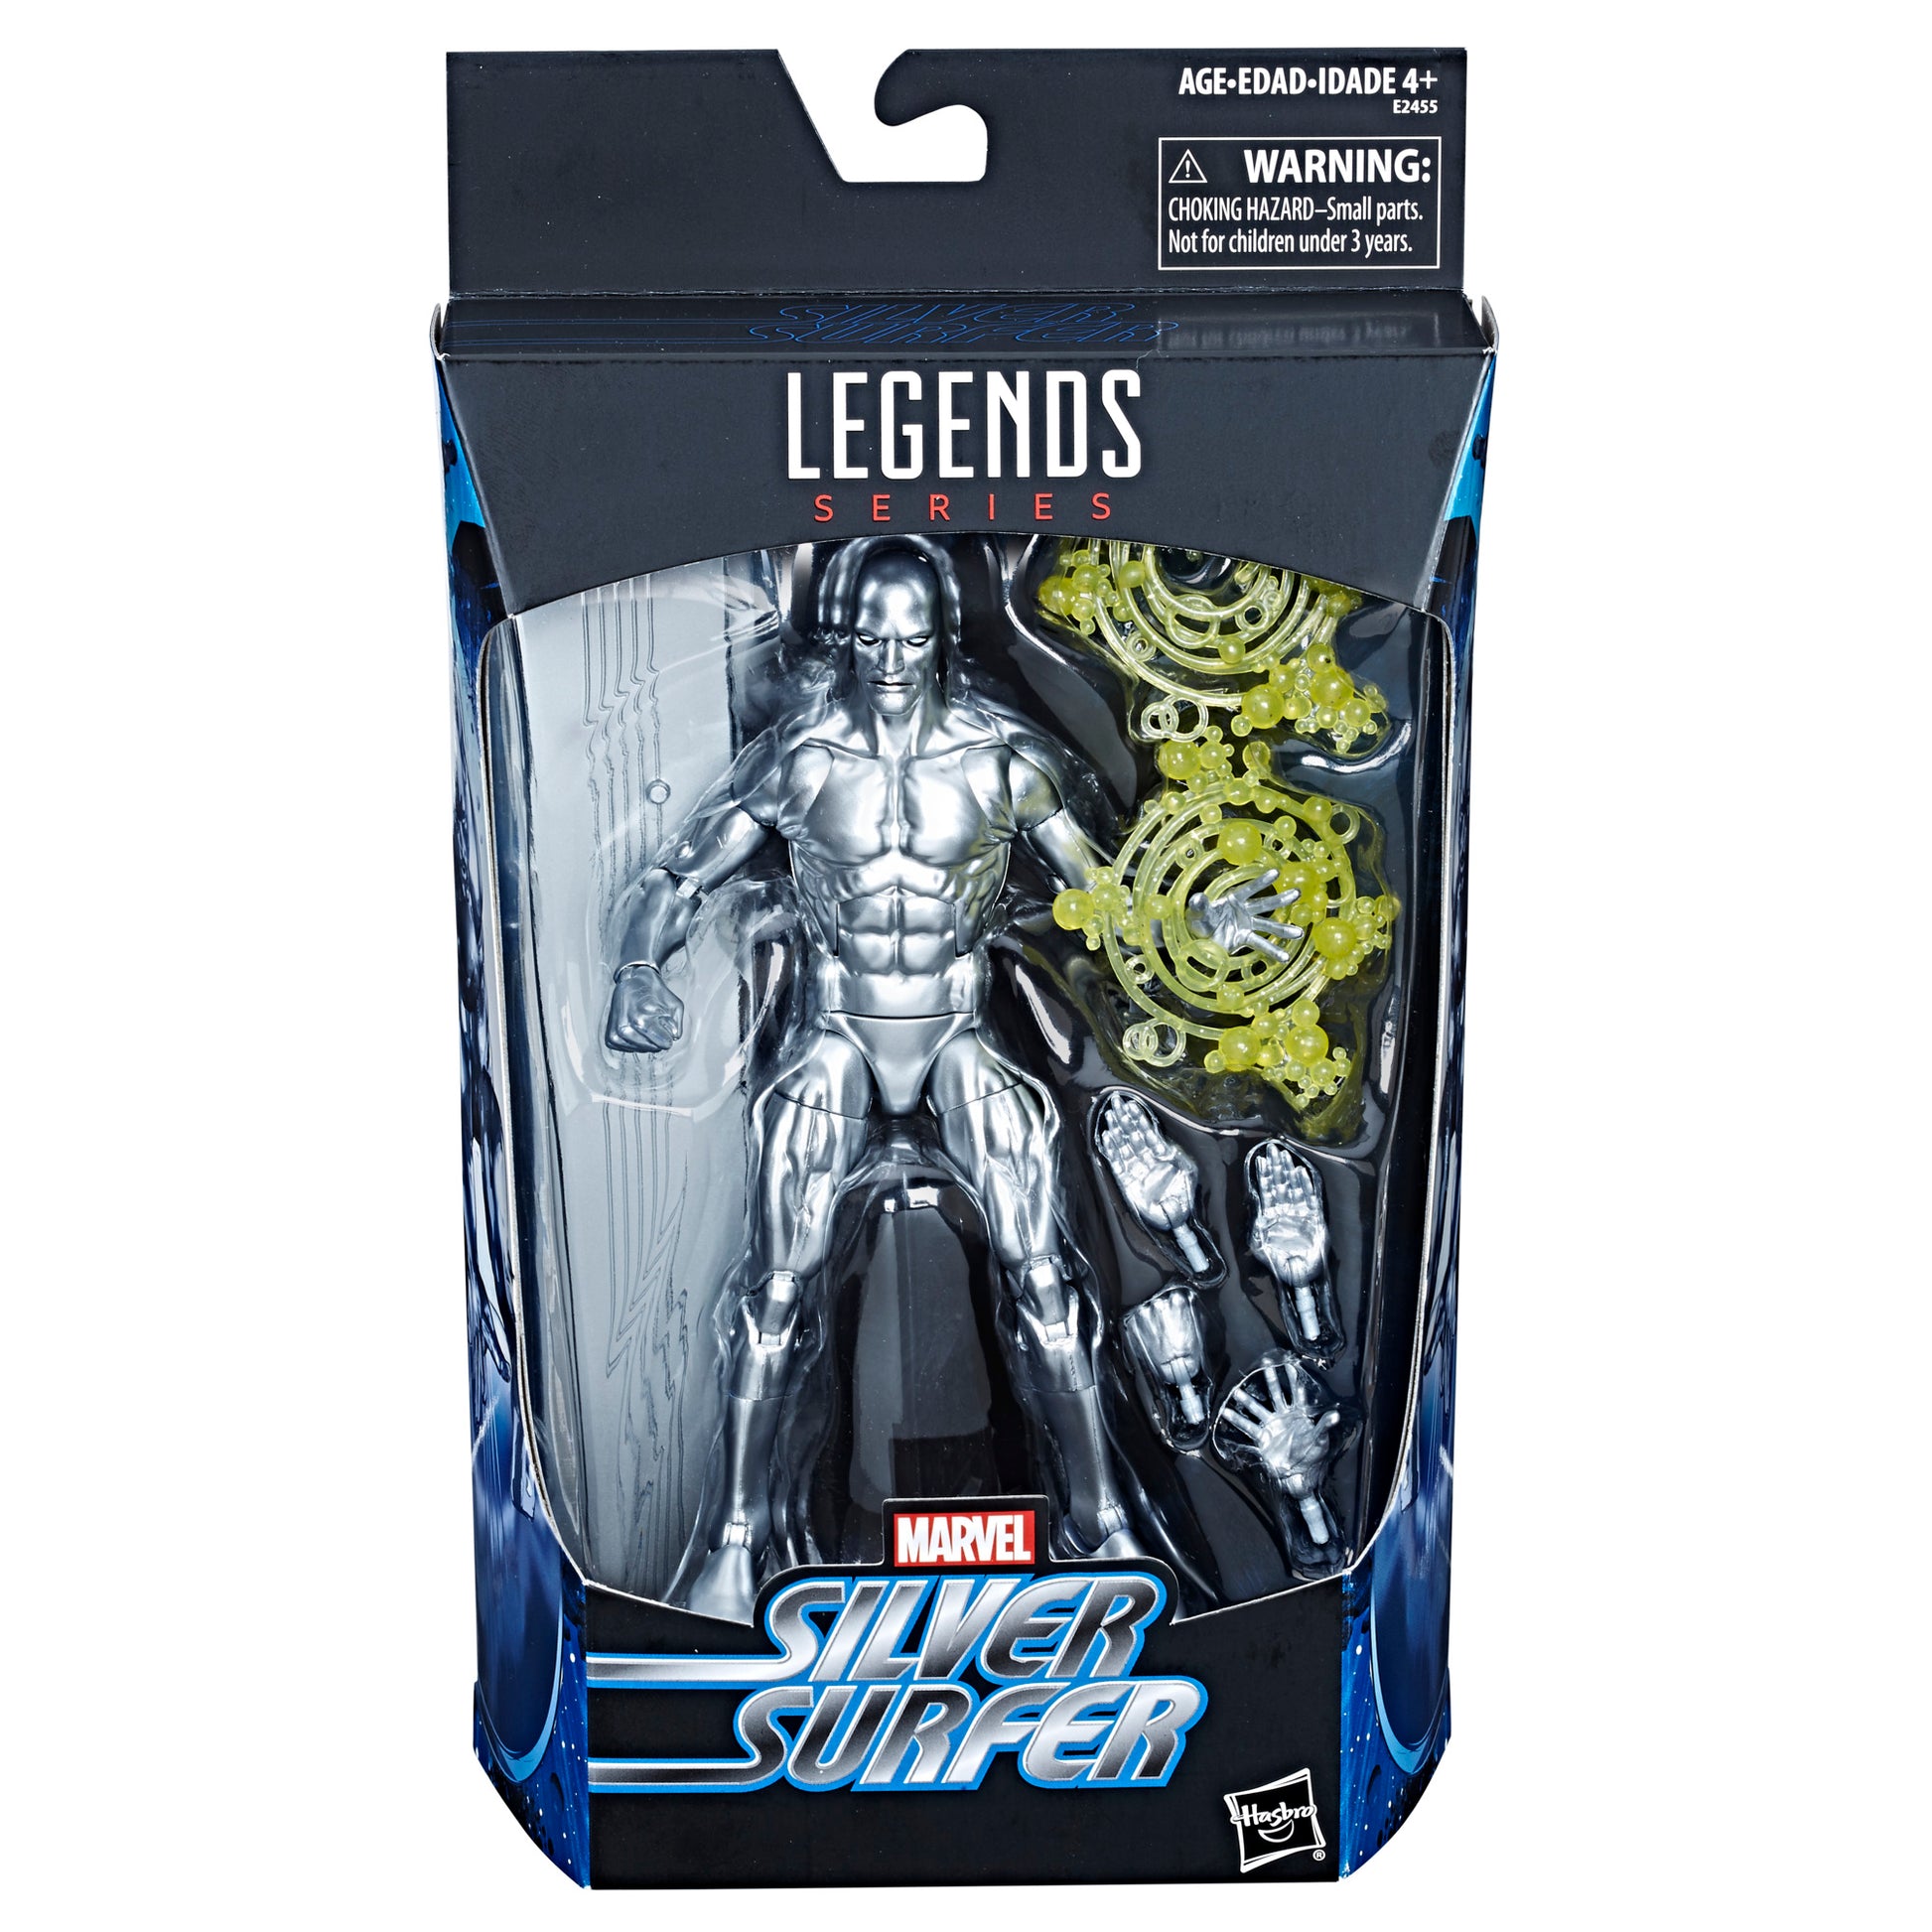 Marvel Legends Series 6-inch Silver Surfer Action Figure